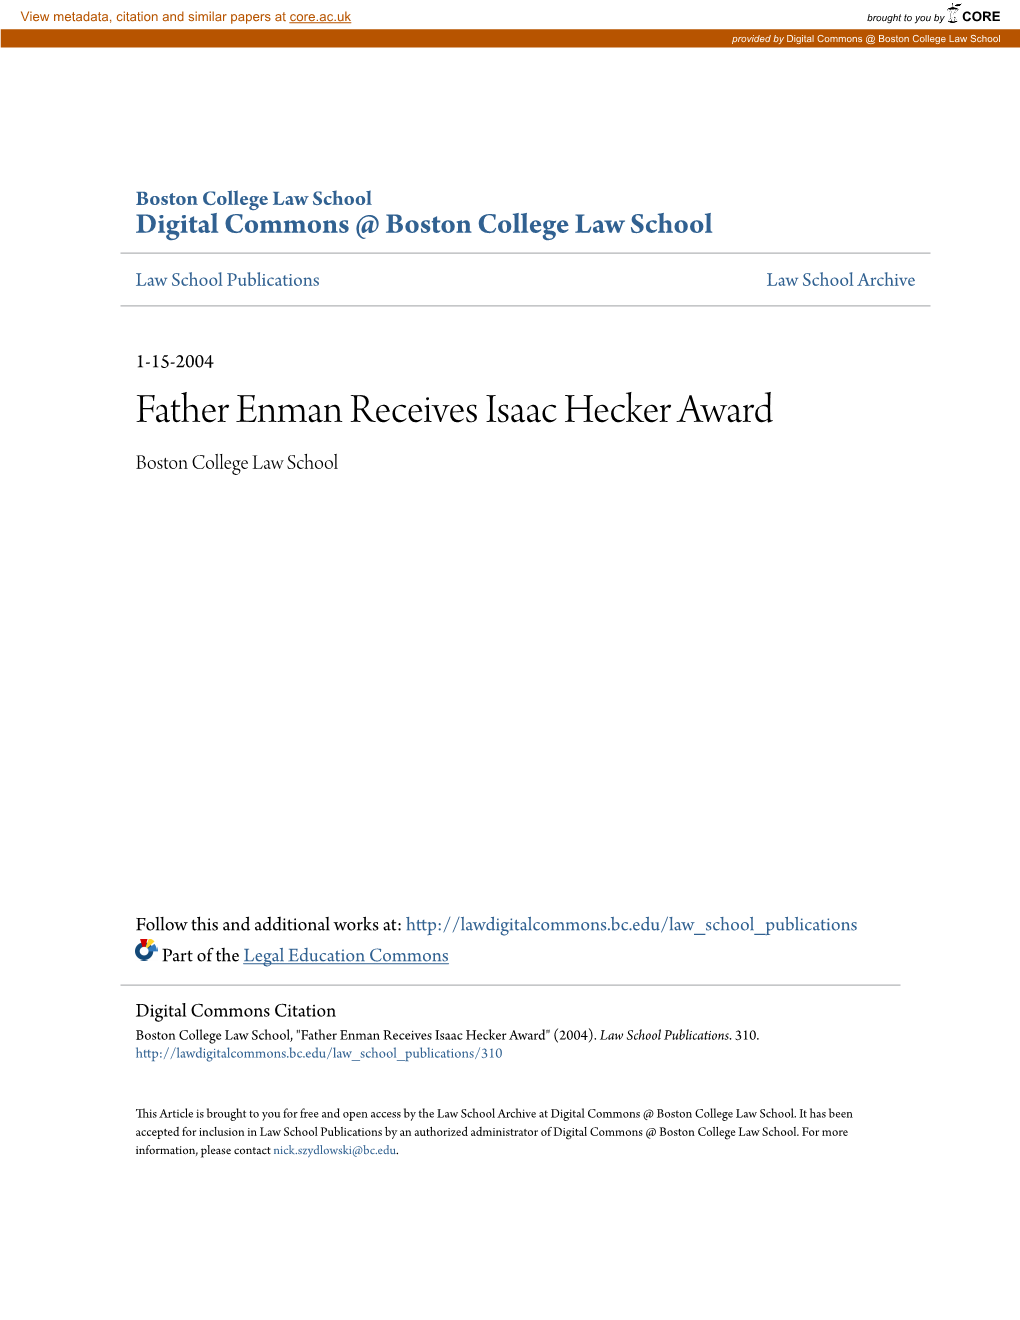 Father Enman Receives Isaac Hecker Award Boston College Law School